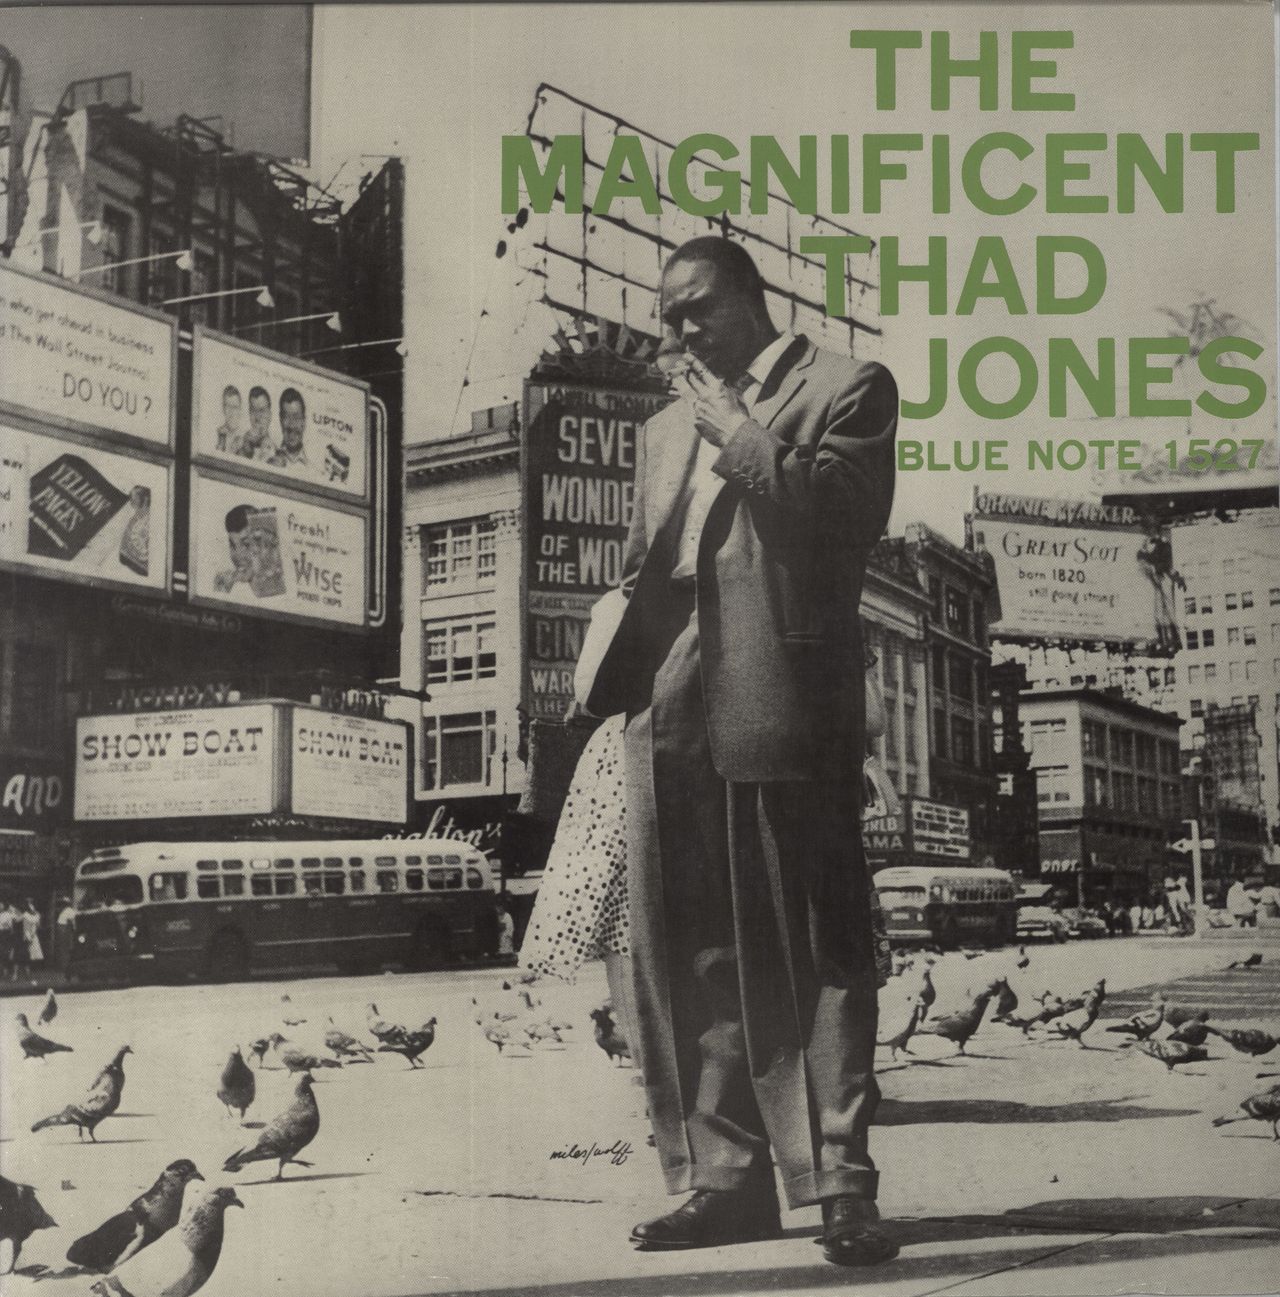 thad-jones-the-magnificent-thad-jones-japanese-promo-vinyl-lp-album-record-blp-1527-816027.jpg